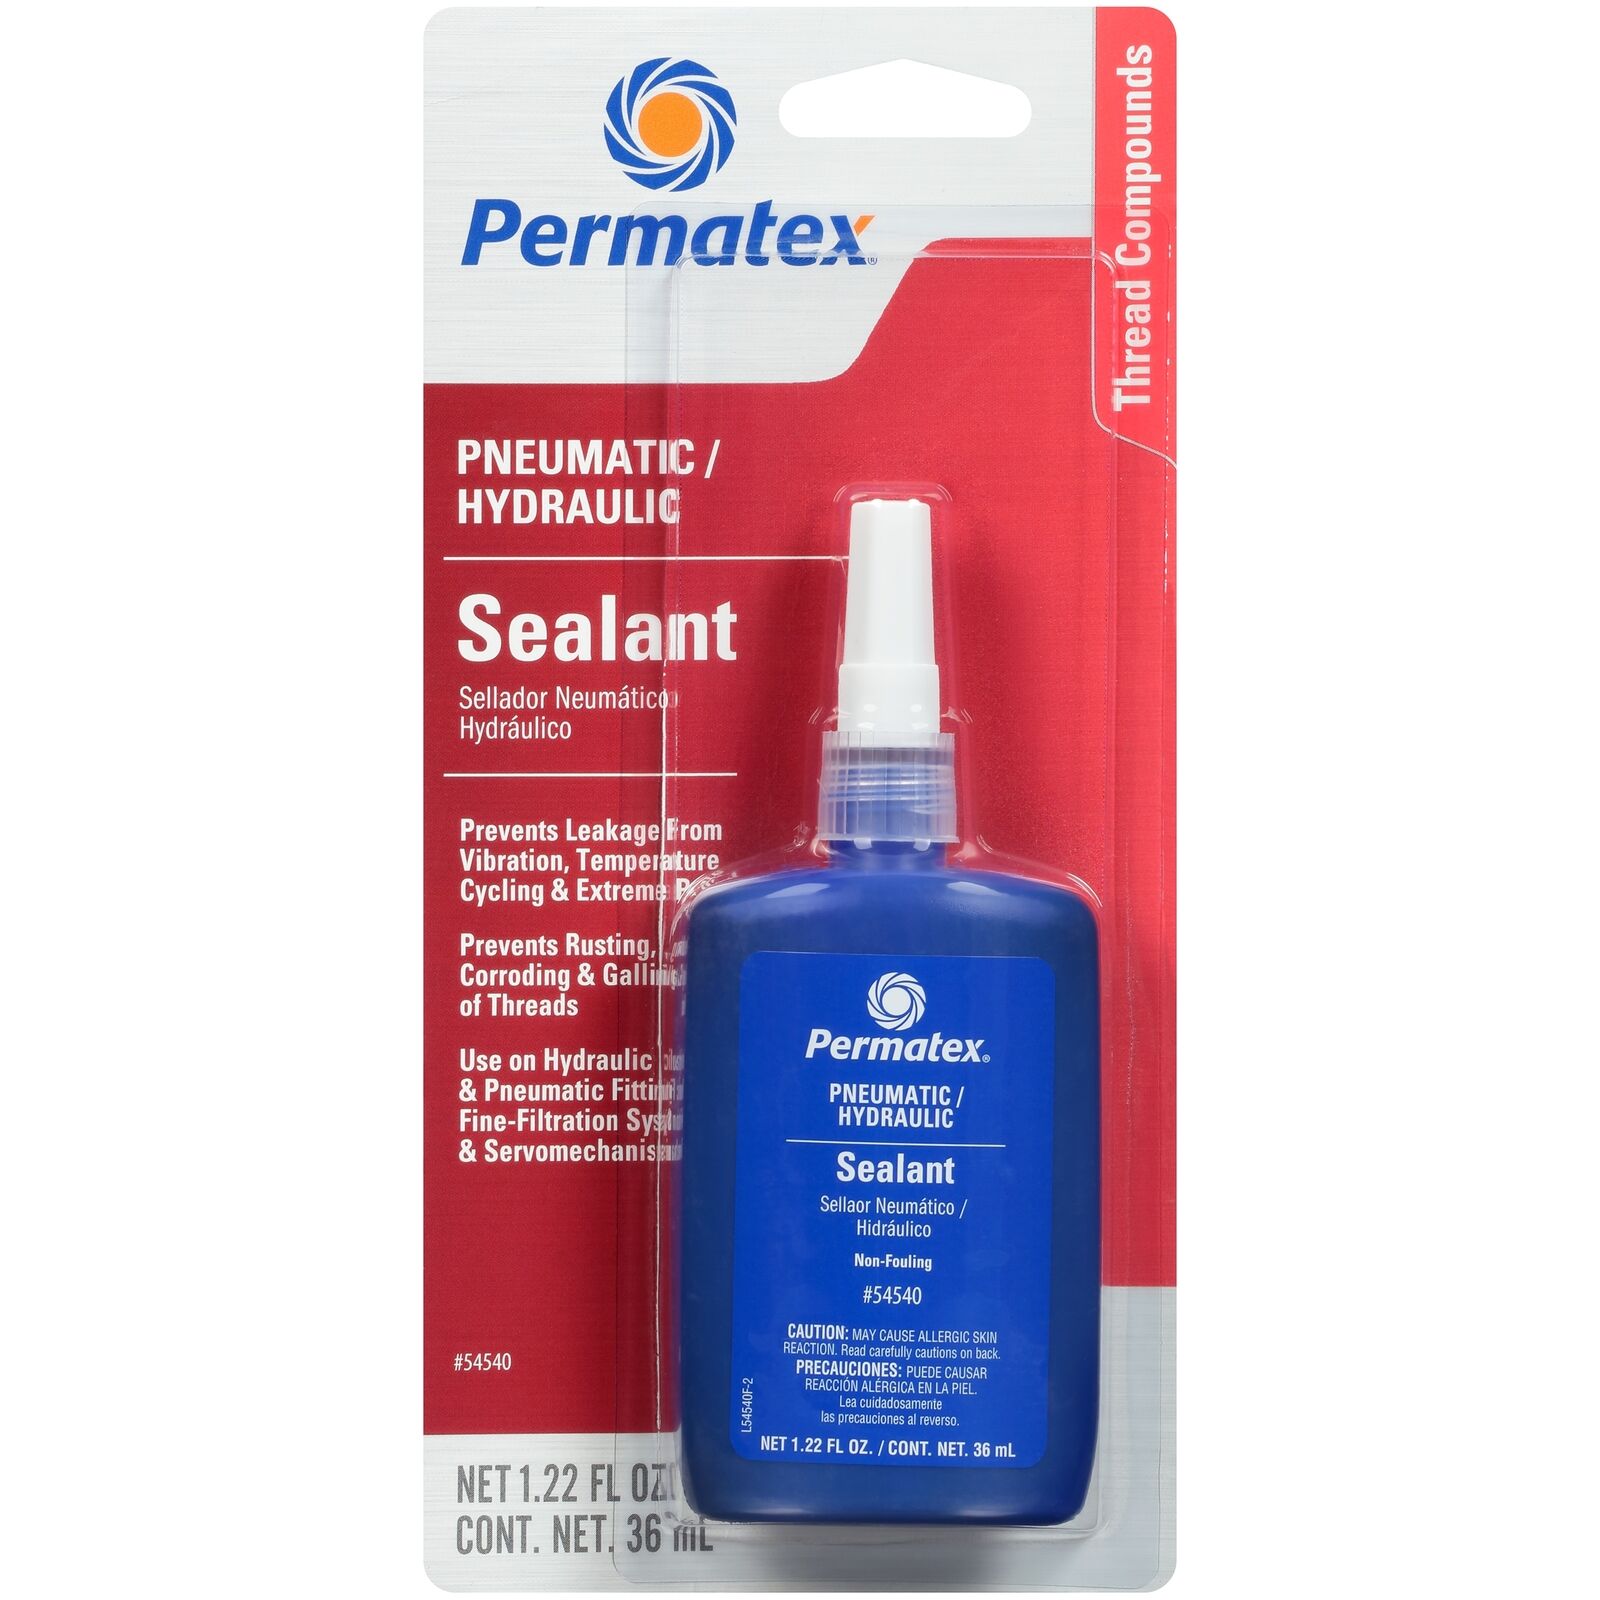 Permatex Spray Sealant Leak Repair Aerosol 340g – Wholesale Paint Group